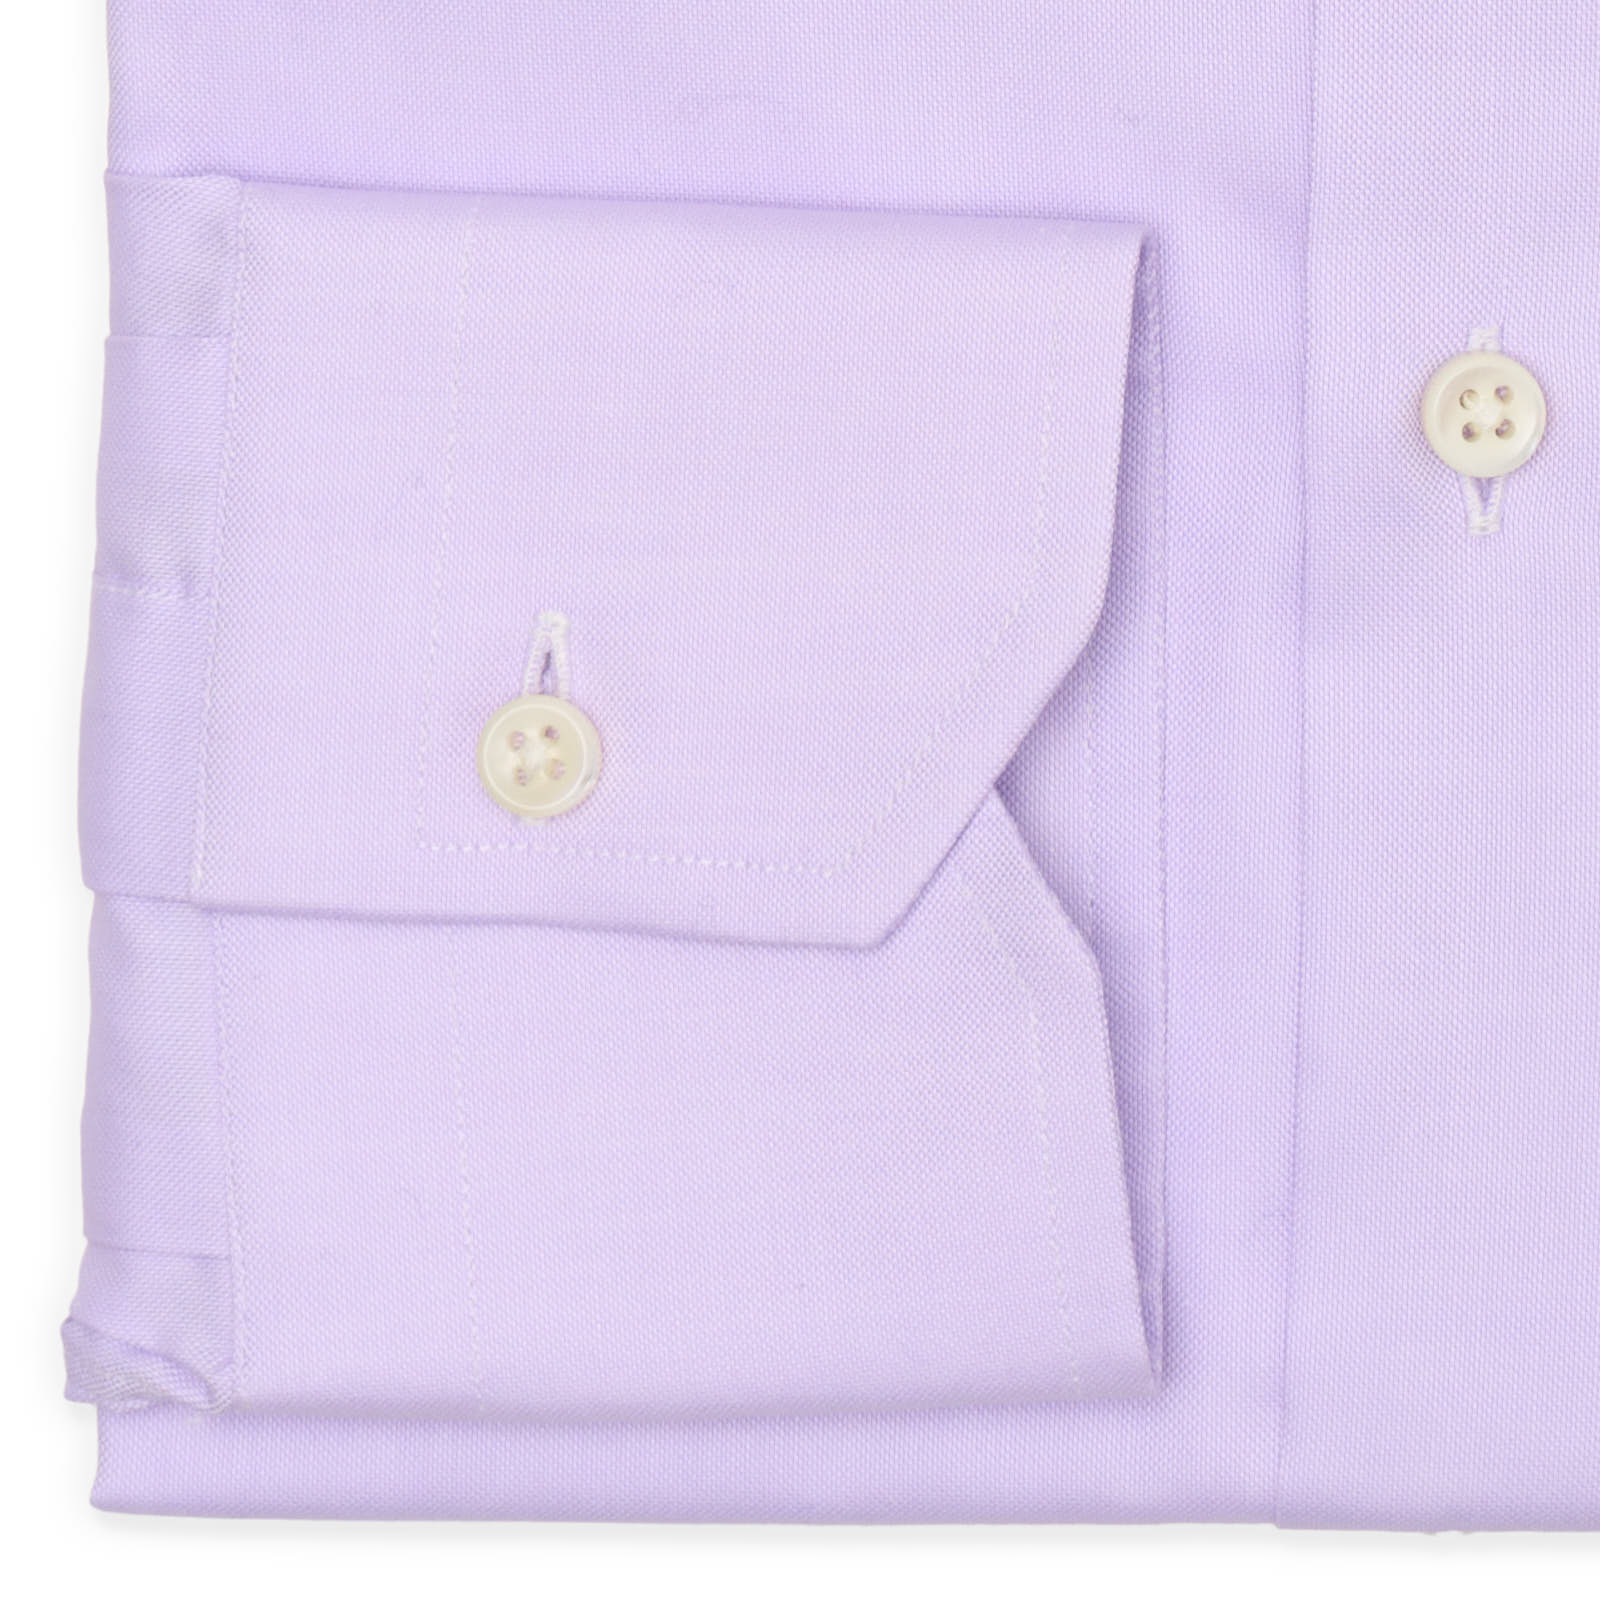 VANNUCCI Milano Lavender Cotton Dress Shirt EU 38 NEW US 15